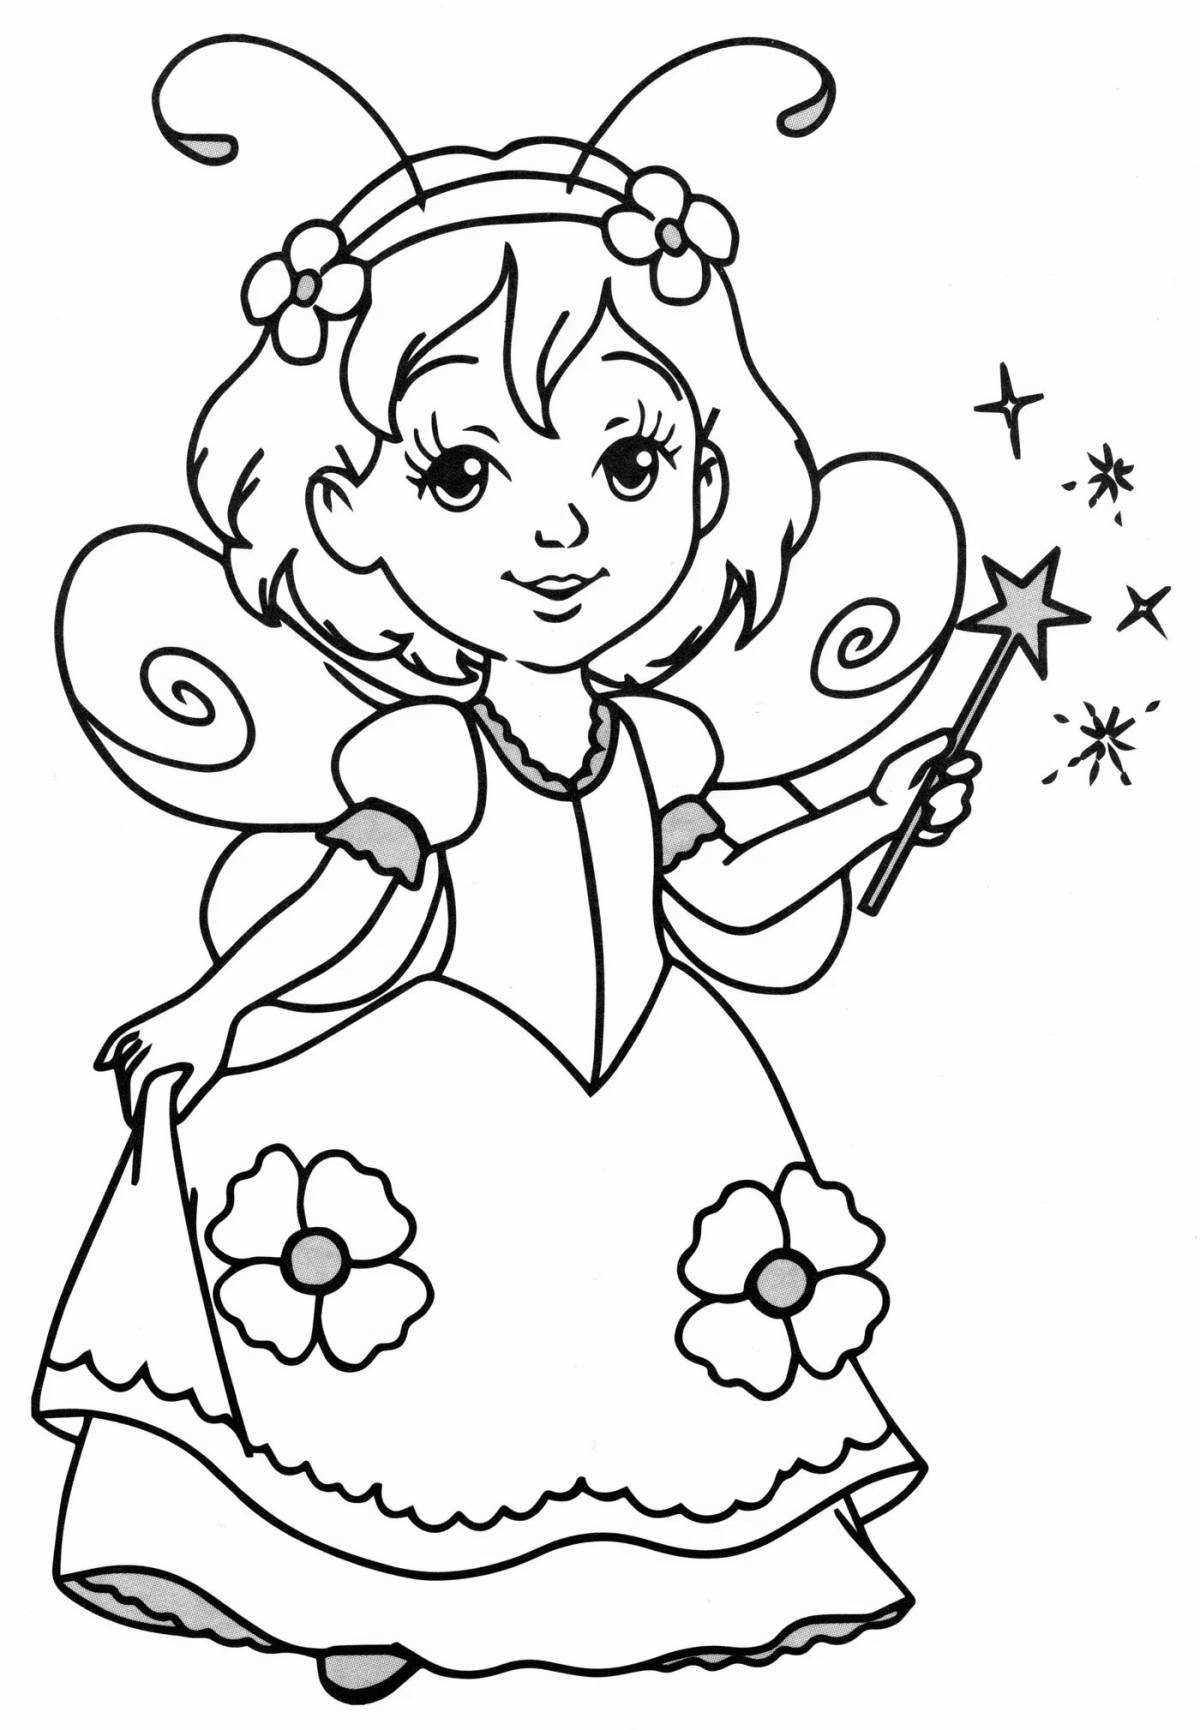 Fantastic princess coloring pages